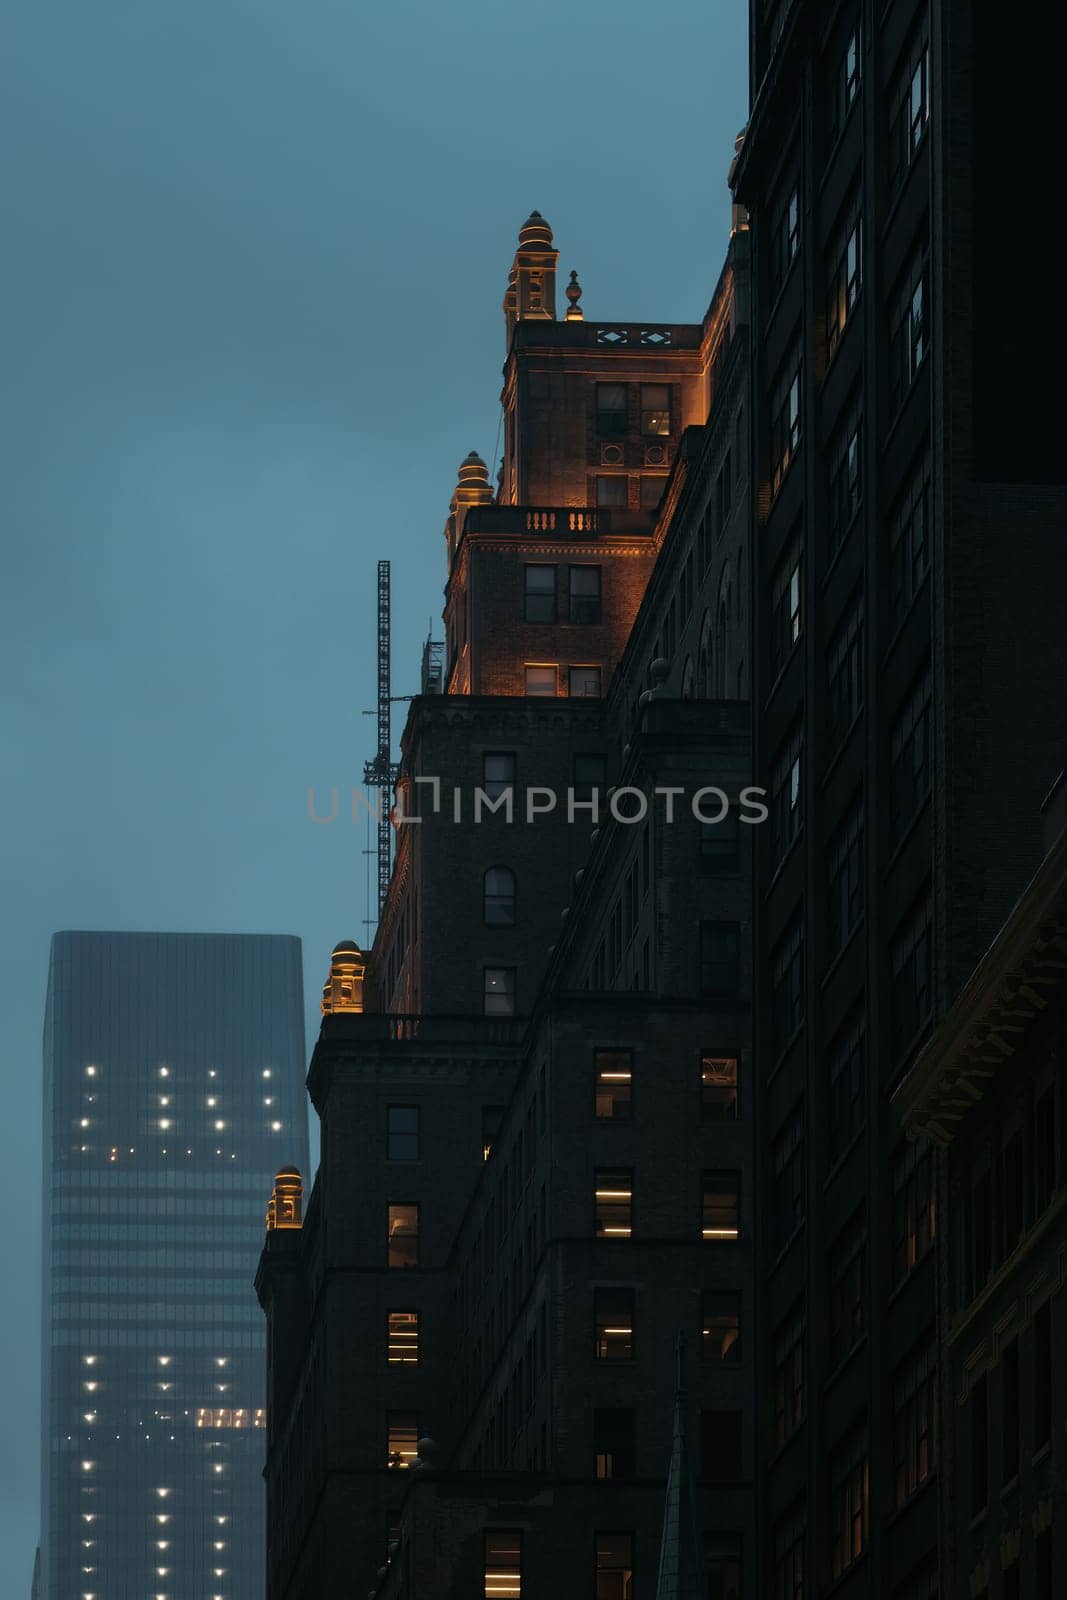 Historic Architecture in New York Illuminated at Twilight by apavlin